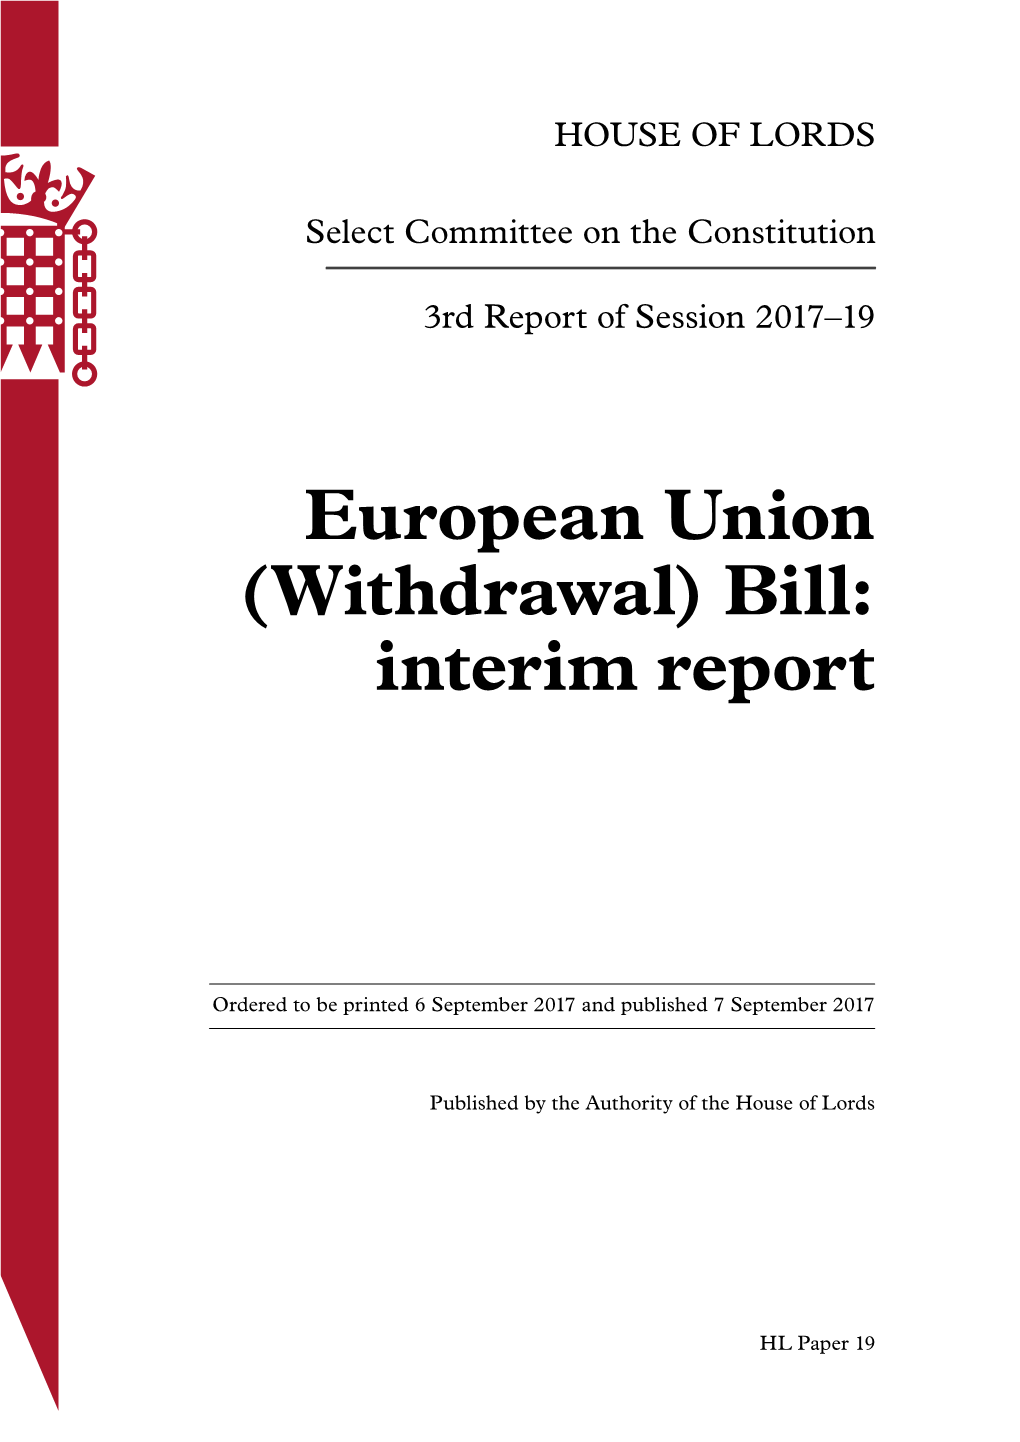 European Union (Withdrawal) Bill: Interim Report